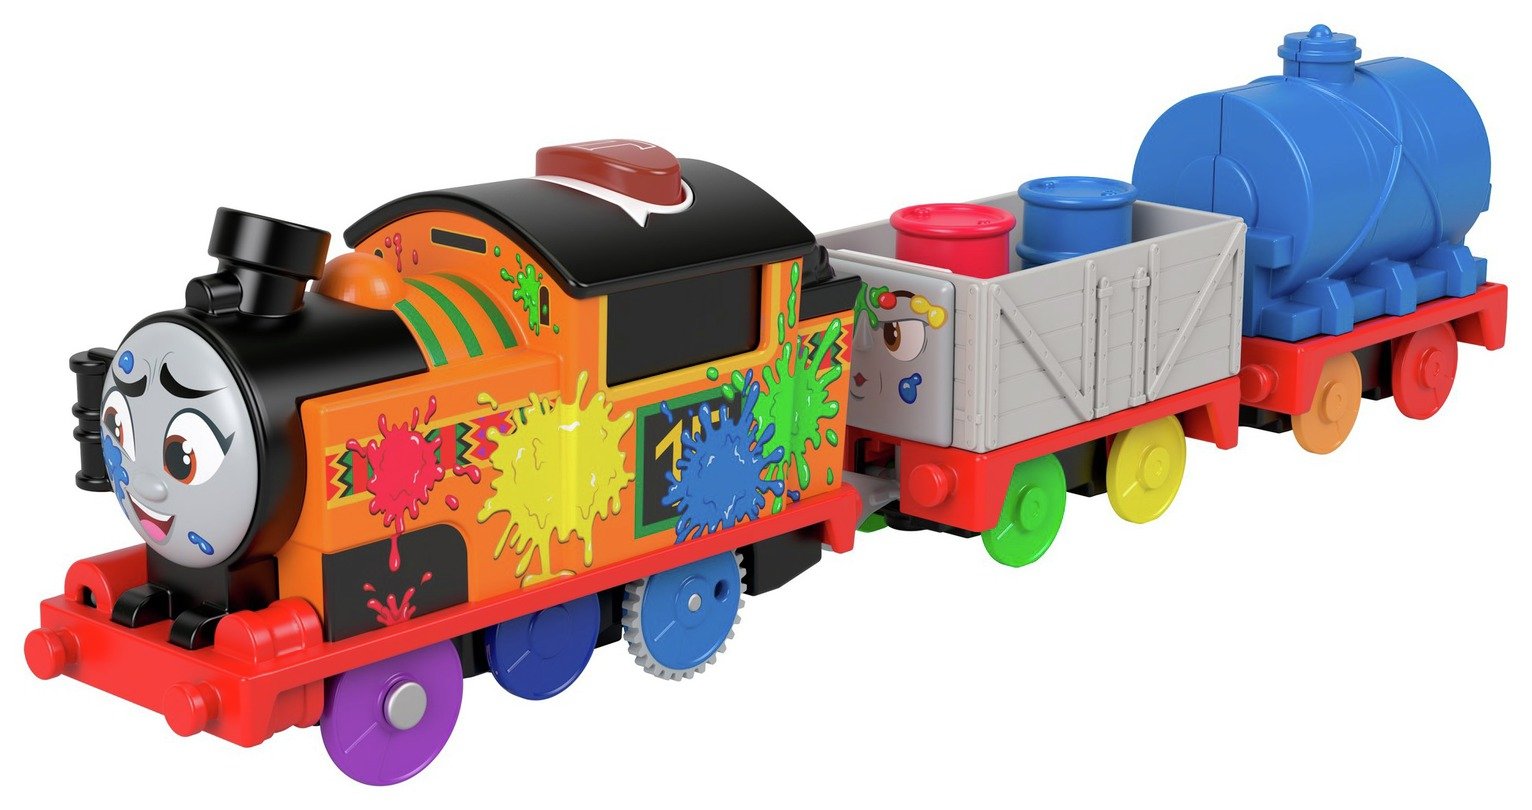 Thomas & Friends Talking Nia Toy Train Engine review